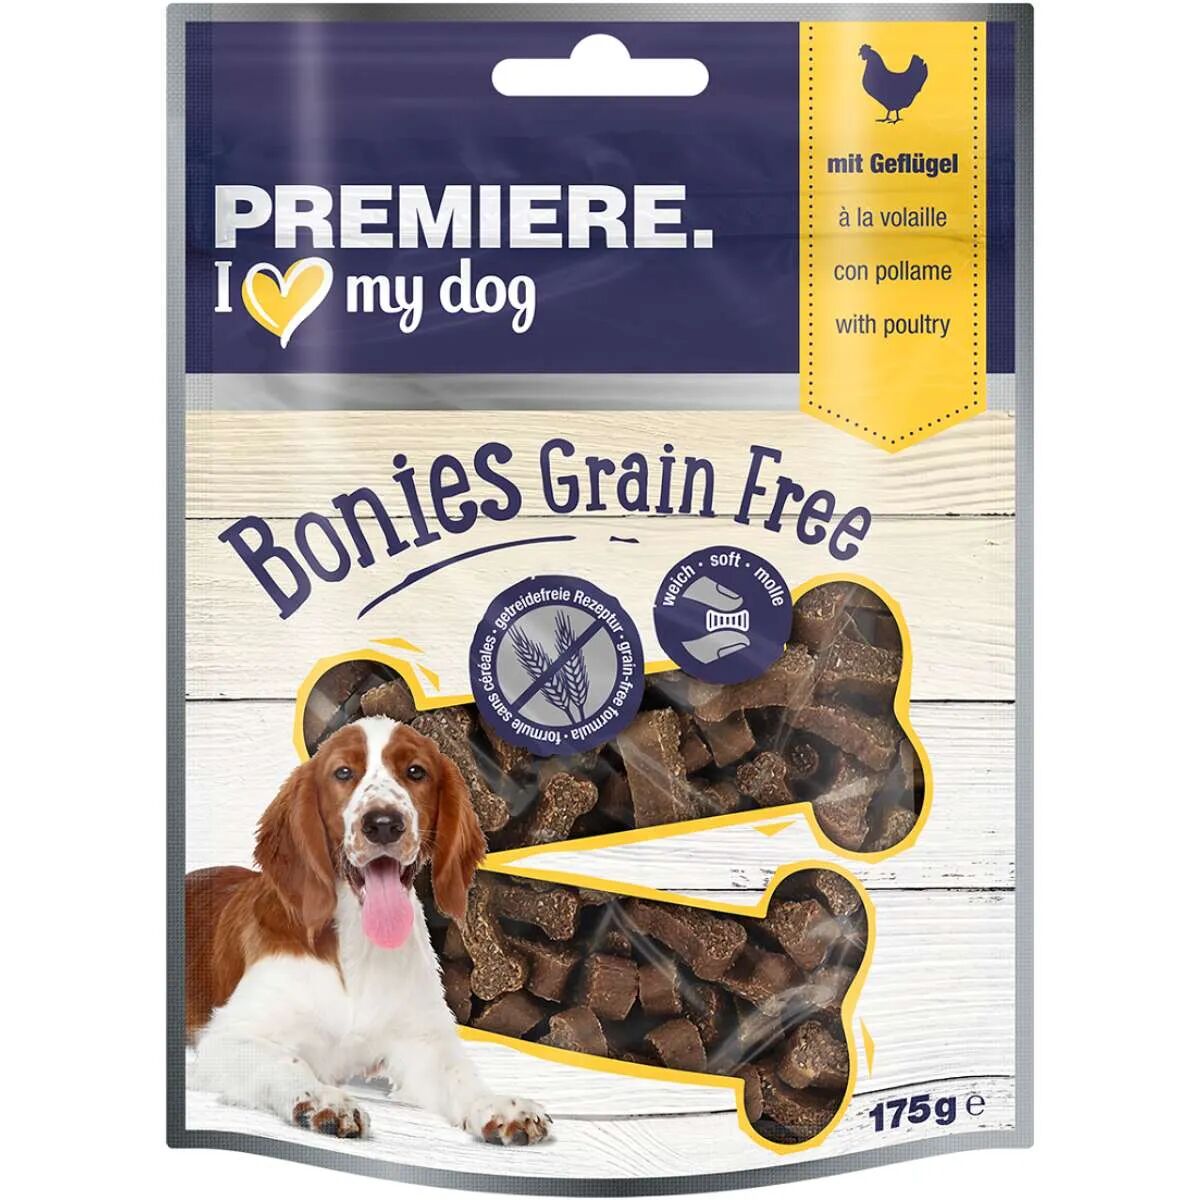 PREMIERE Bonies Snack Dog Adult 175G POLLAME